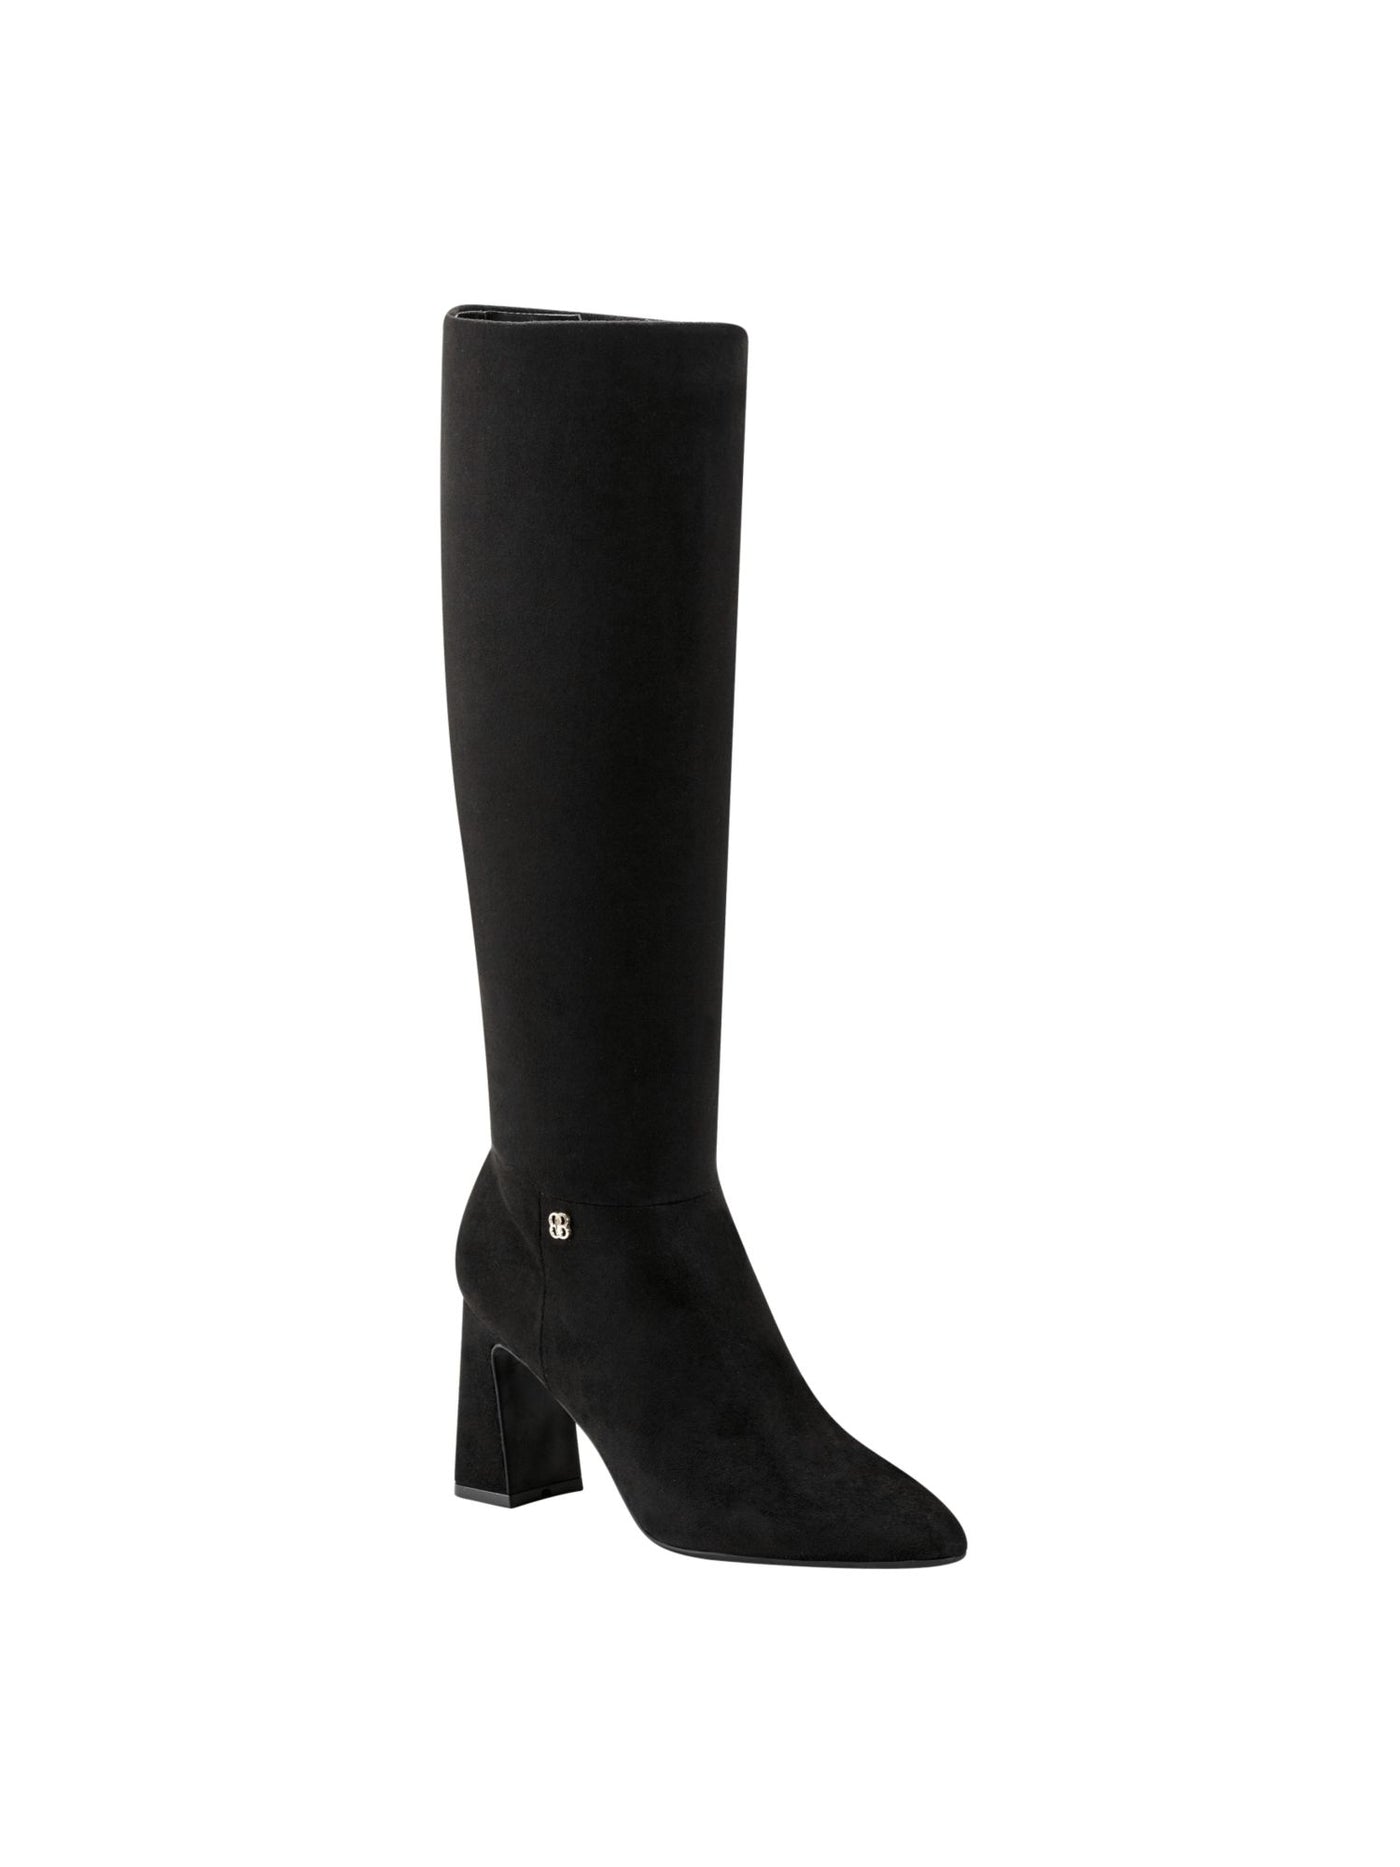 BANDOLINO Womens Black Goring Padded Kyla Pointed Toe Sculpted Heel Zip-Up Dress Boots 11 M